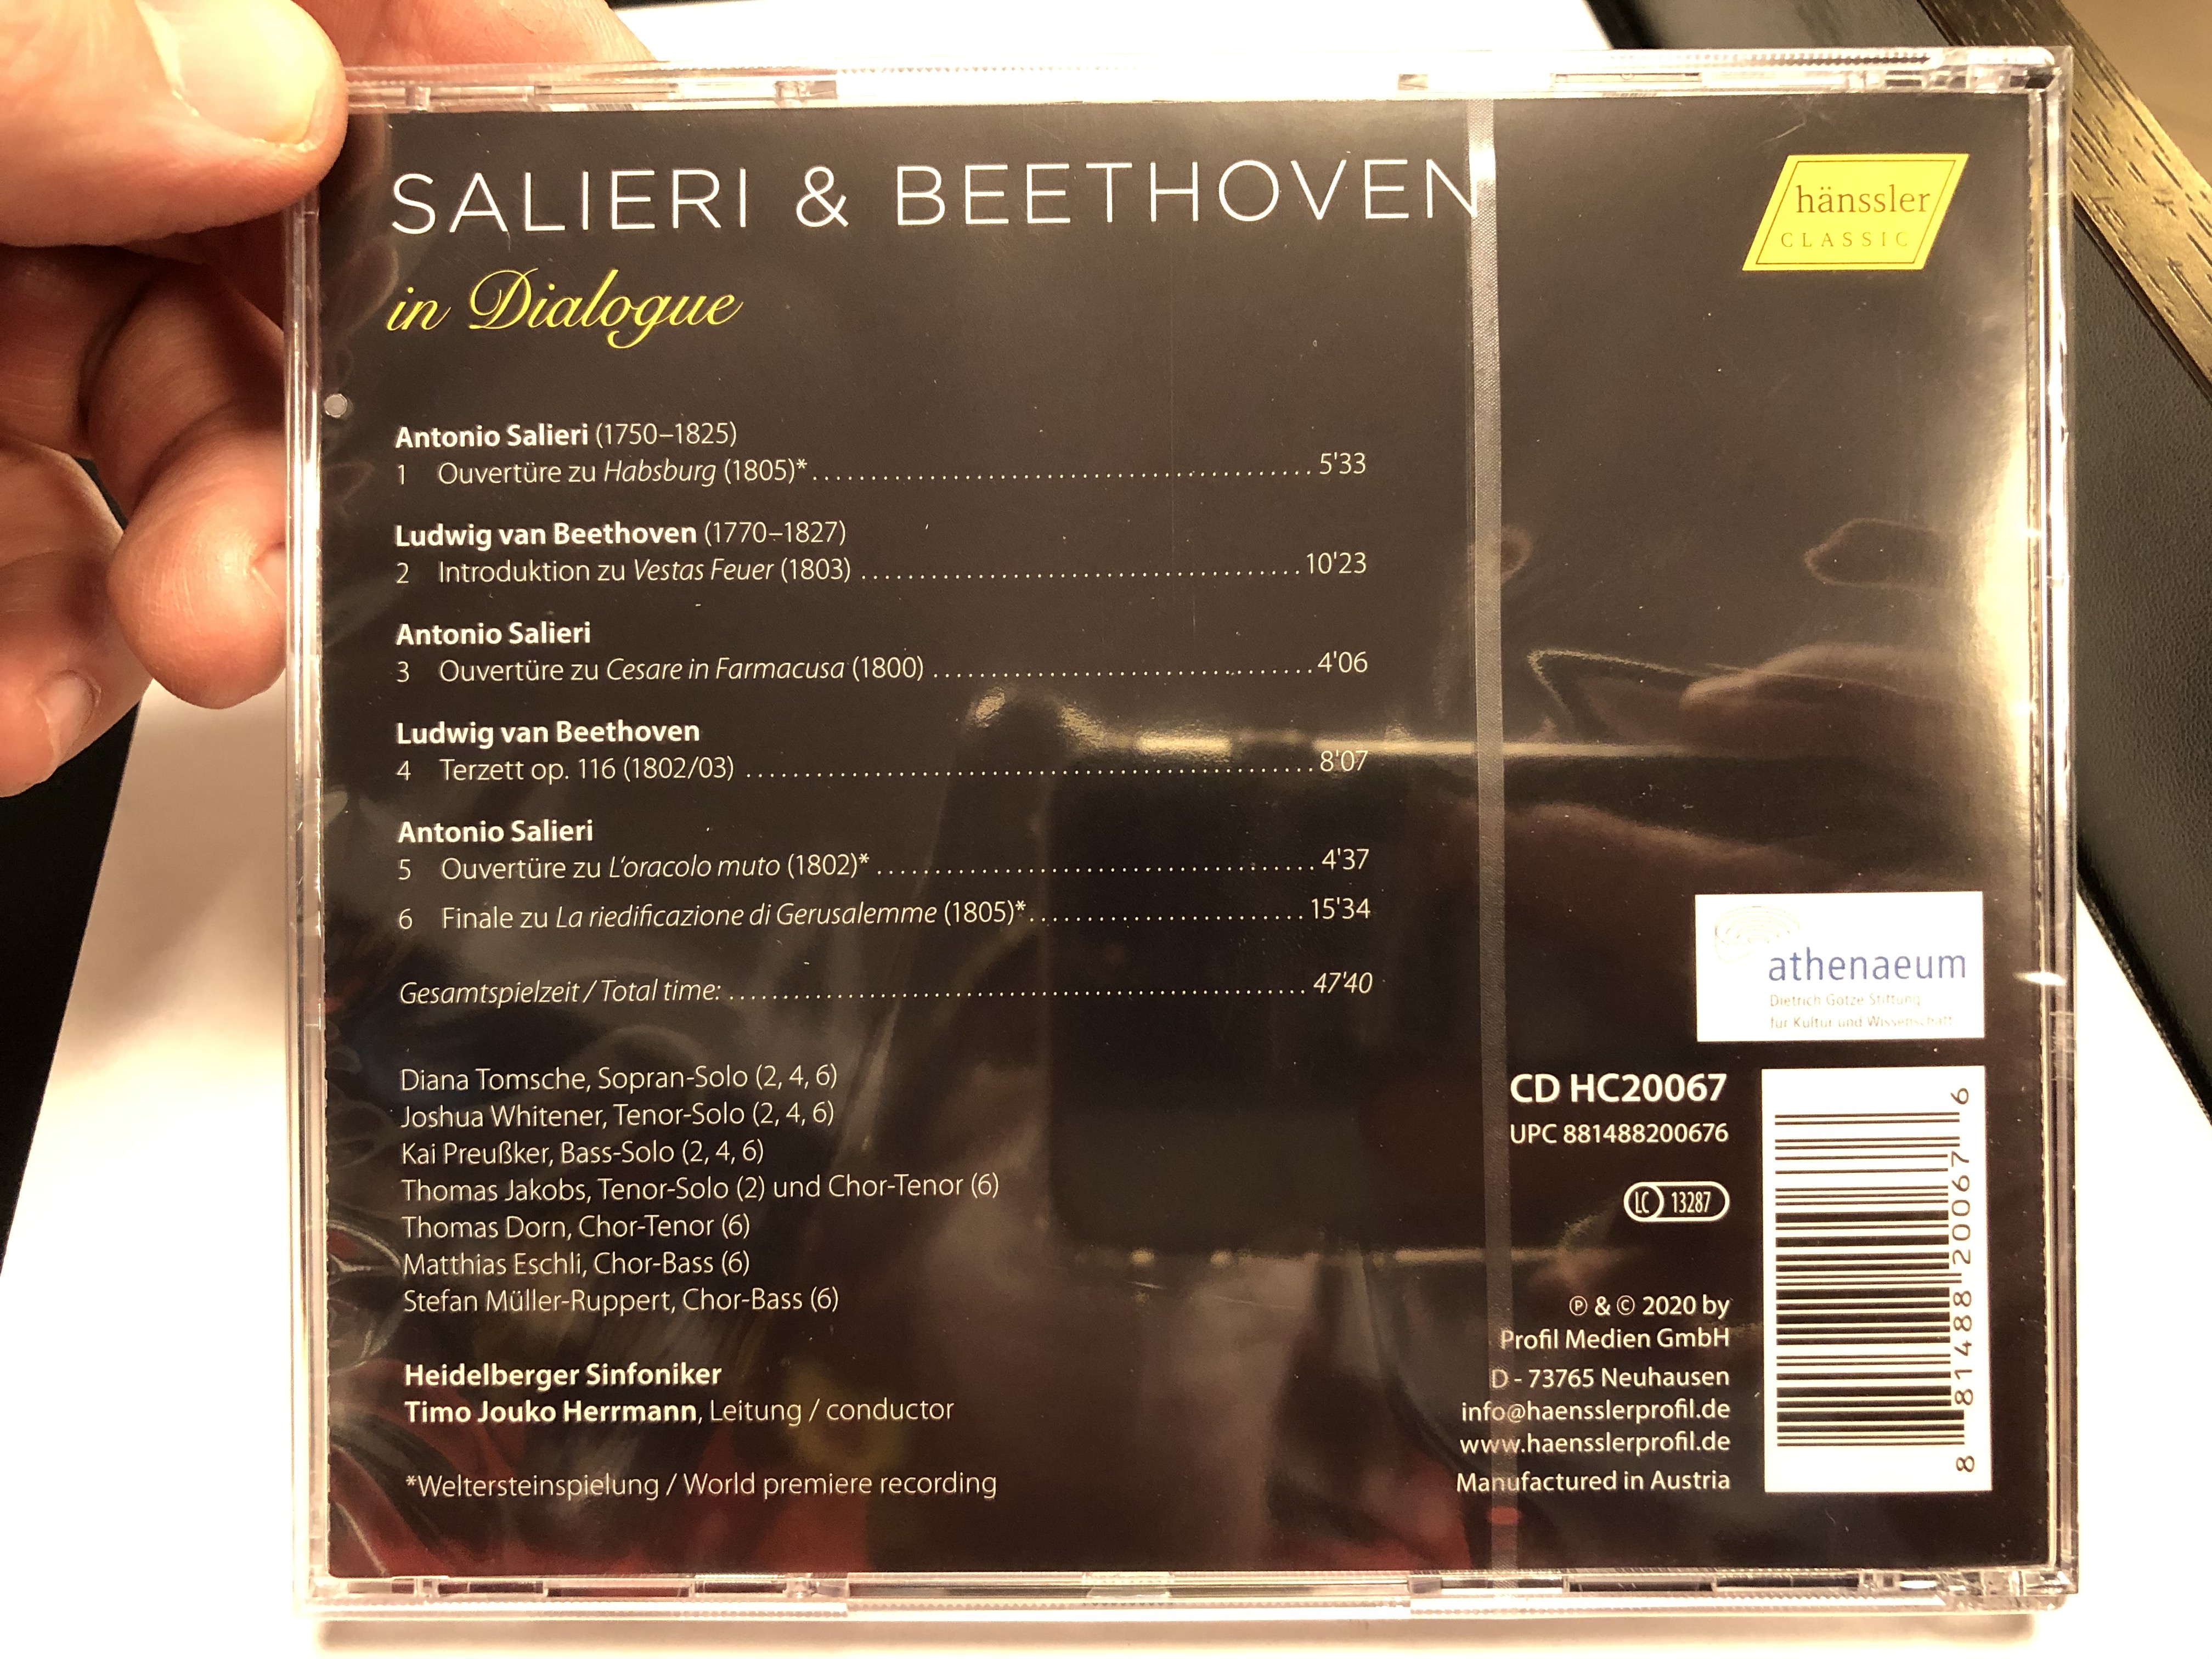 salieri-beethoven-in-dialogue-diana-tomsche-joshua-whitener-kai-preusker-heidelberger-sinfoniker-timo-jouko-herrmann-hanssler-classic-audio-cd-2020-hc20067-2-.jpg